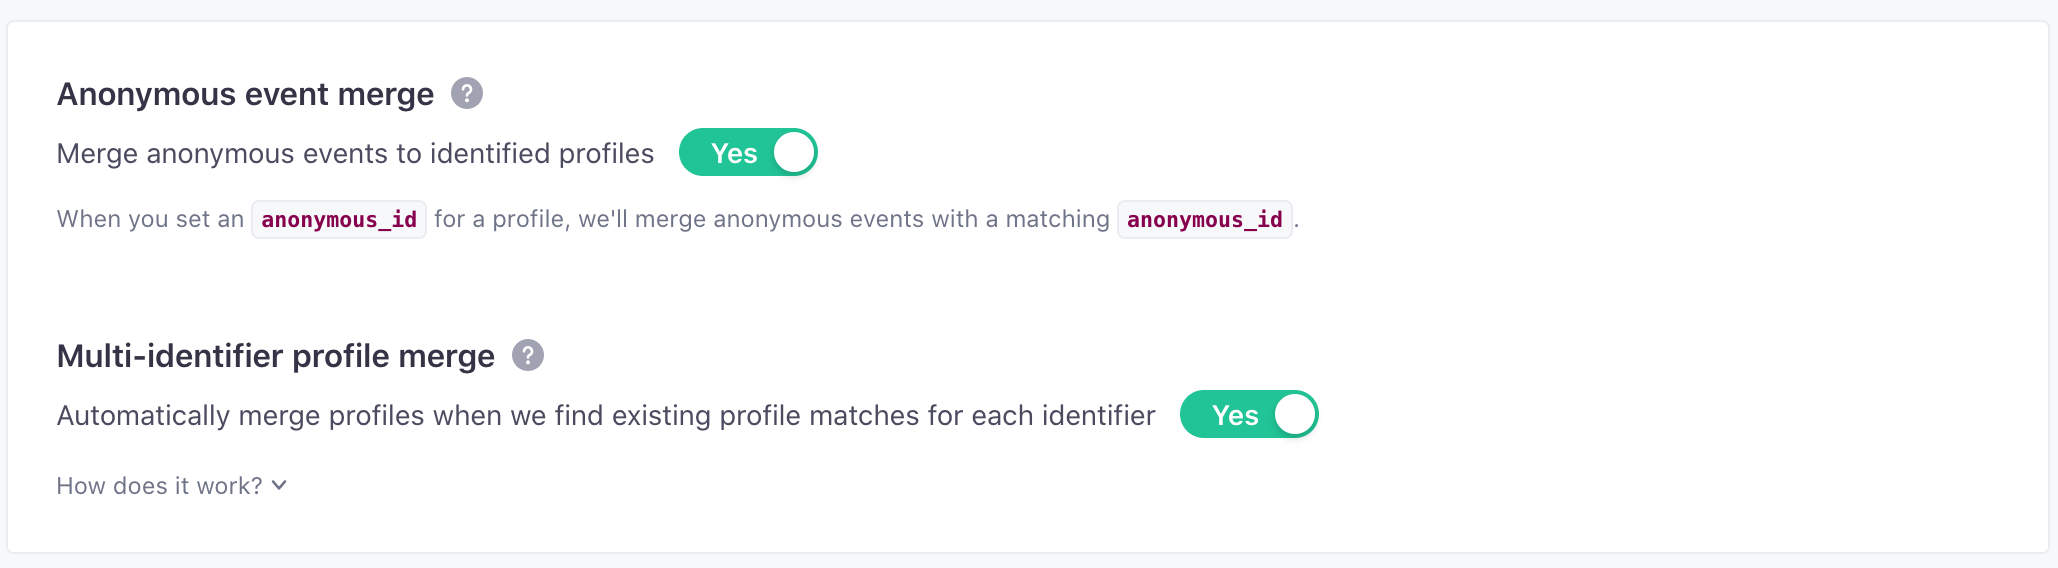 enable the multi-identifier profile merge setting